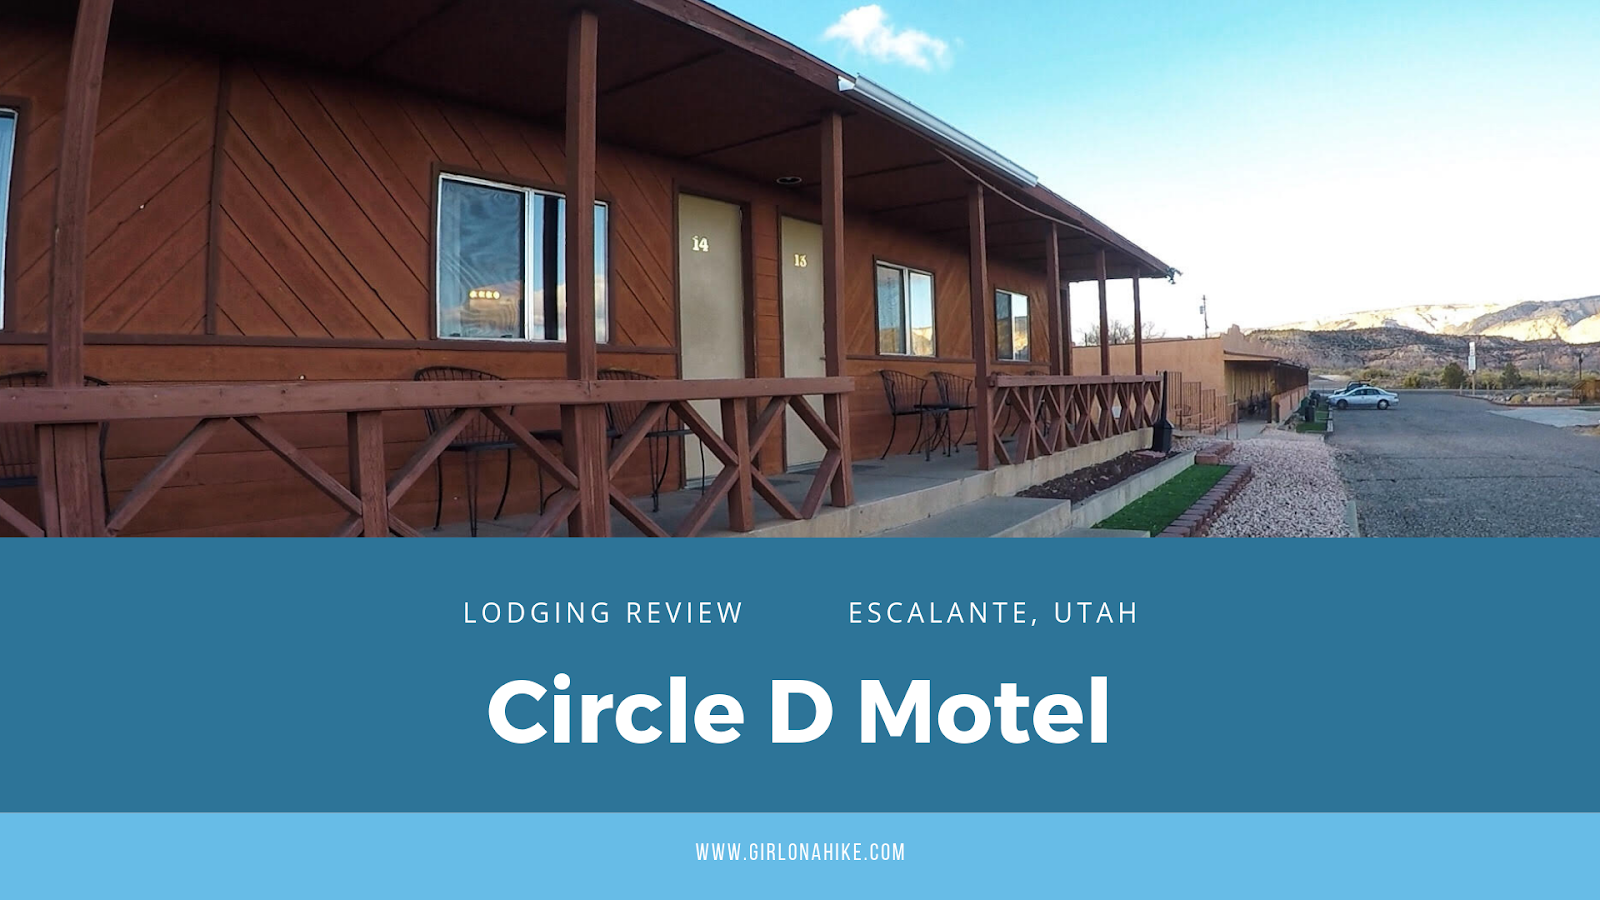 Lodging Review: Circle D Motel, Escalante, Utah